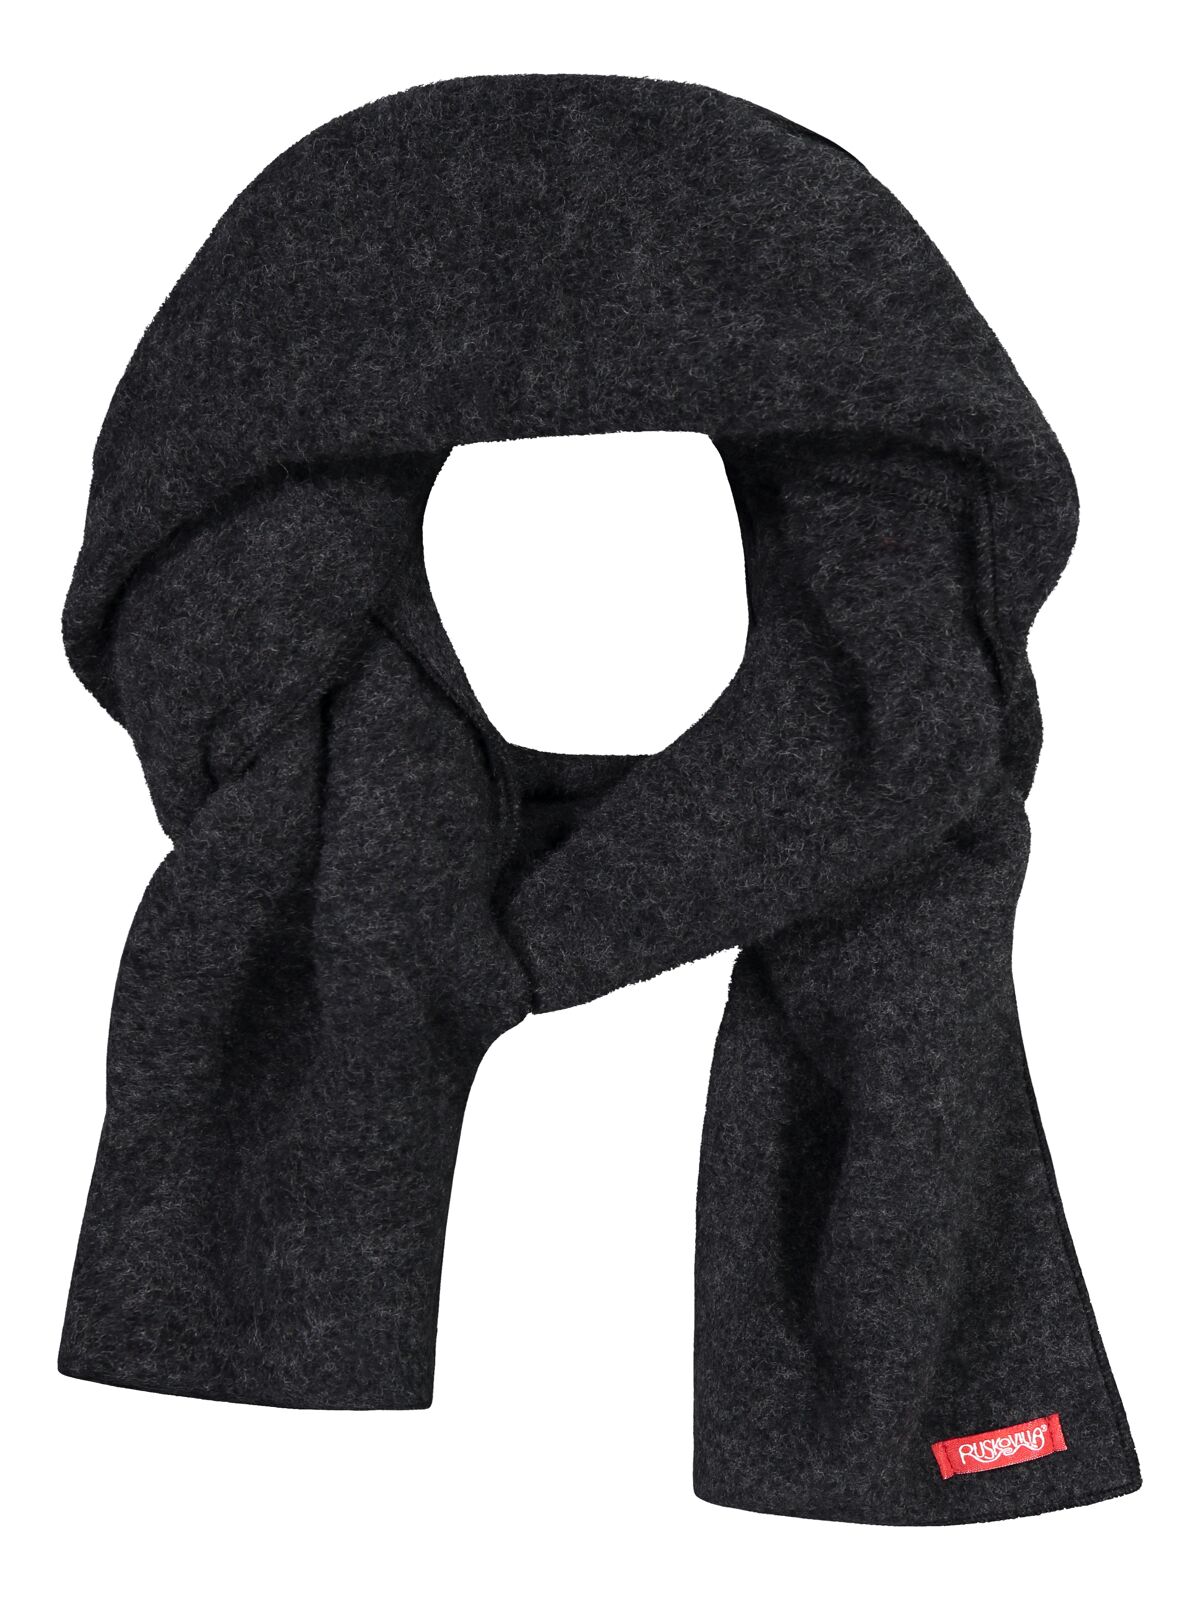 Ruskovilla's Adults organic Wool fleece scarf